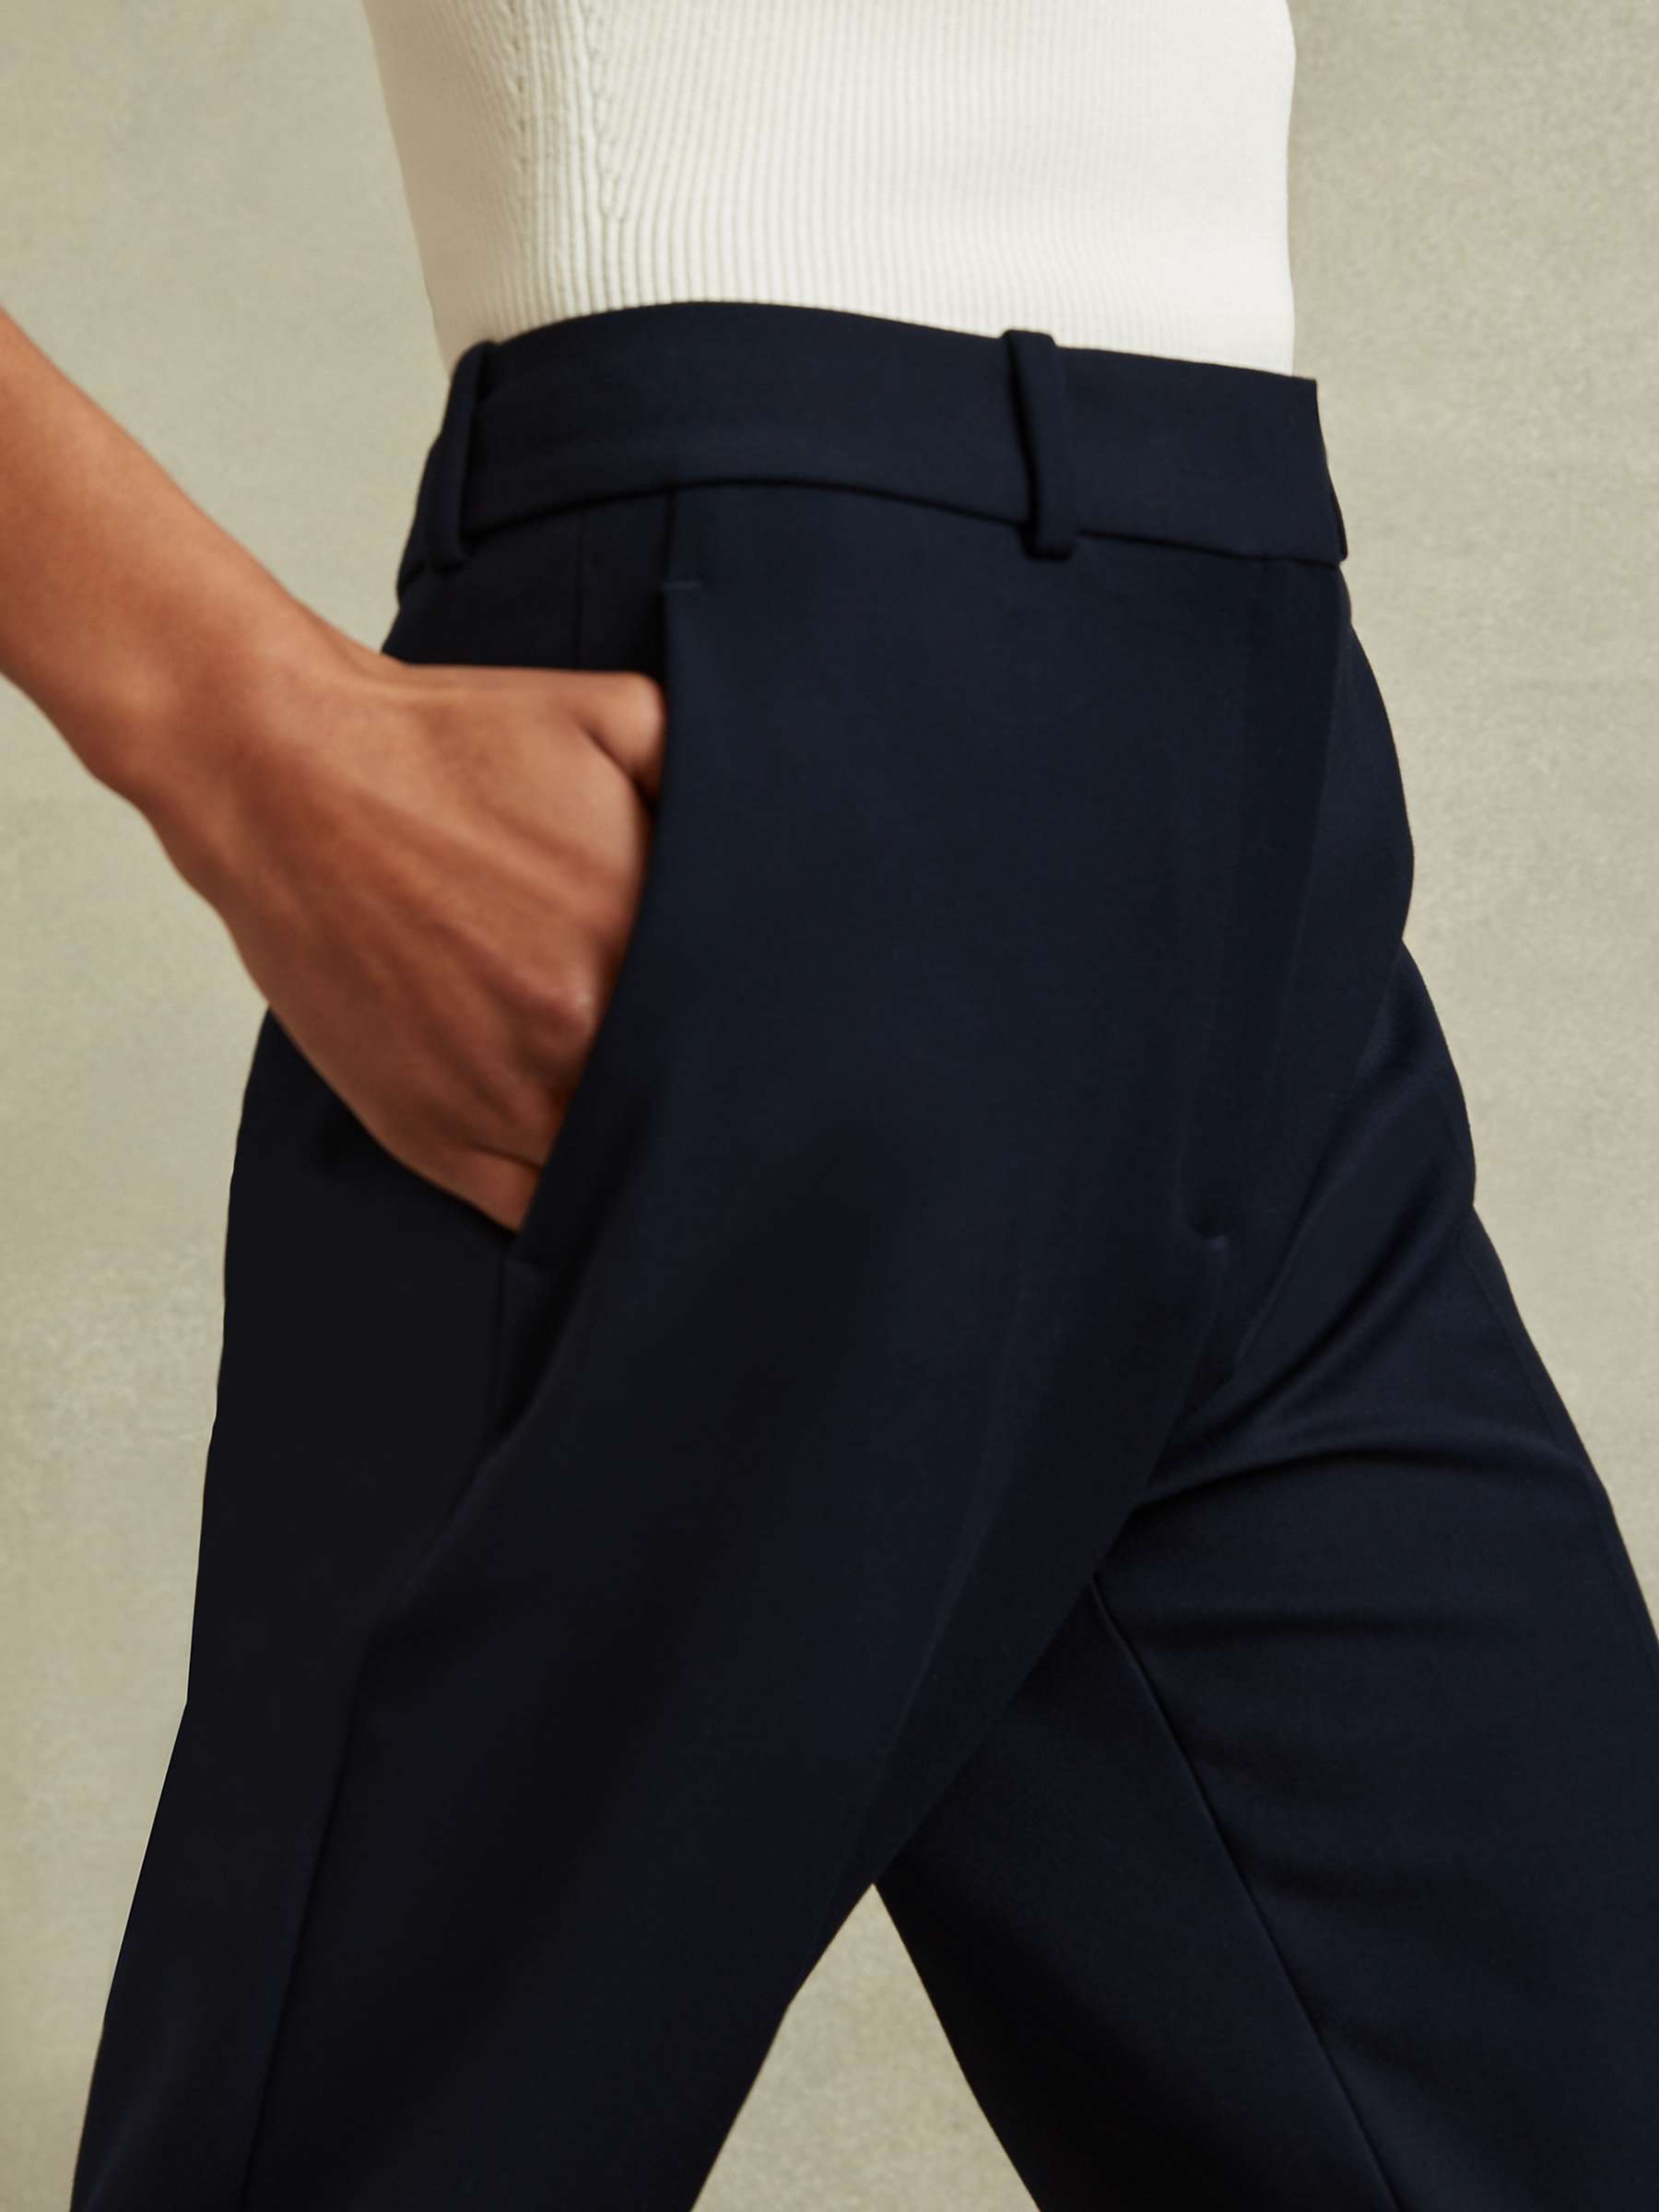 Buy Reiss Gabi Slim Fit Tailored Suit Trousers Online at johnlewis.com